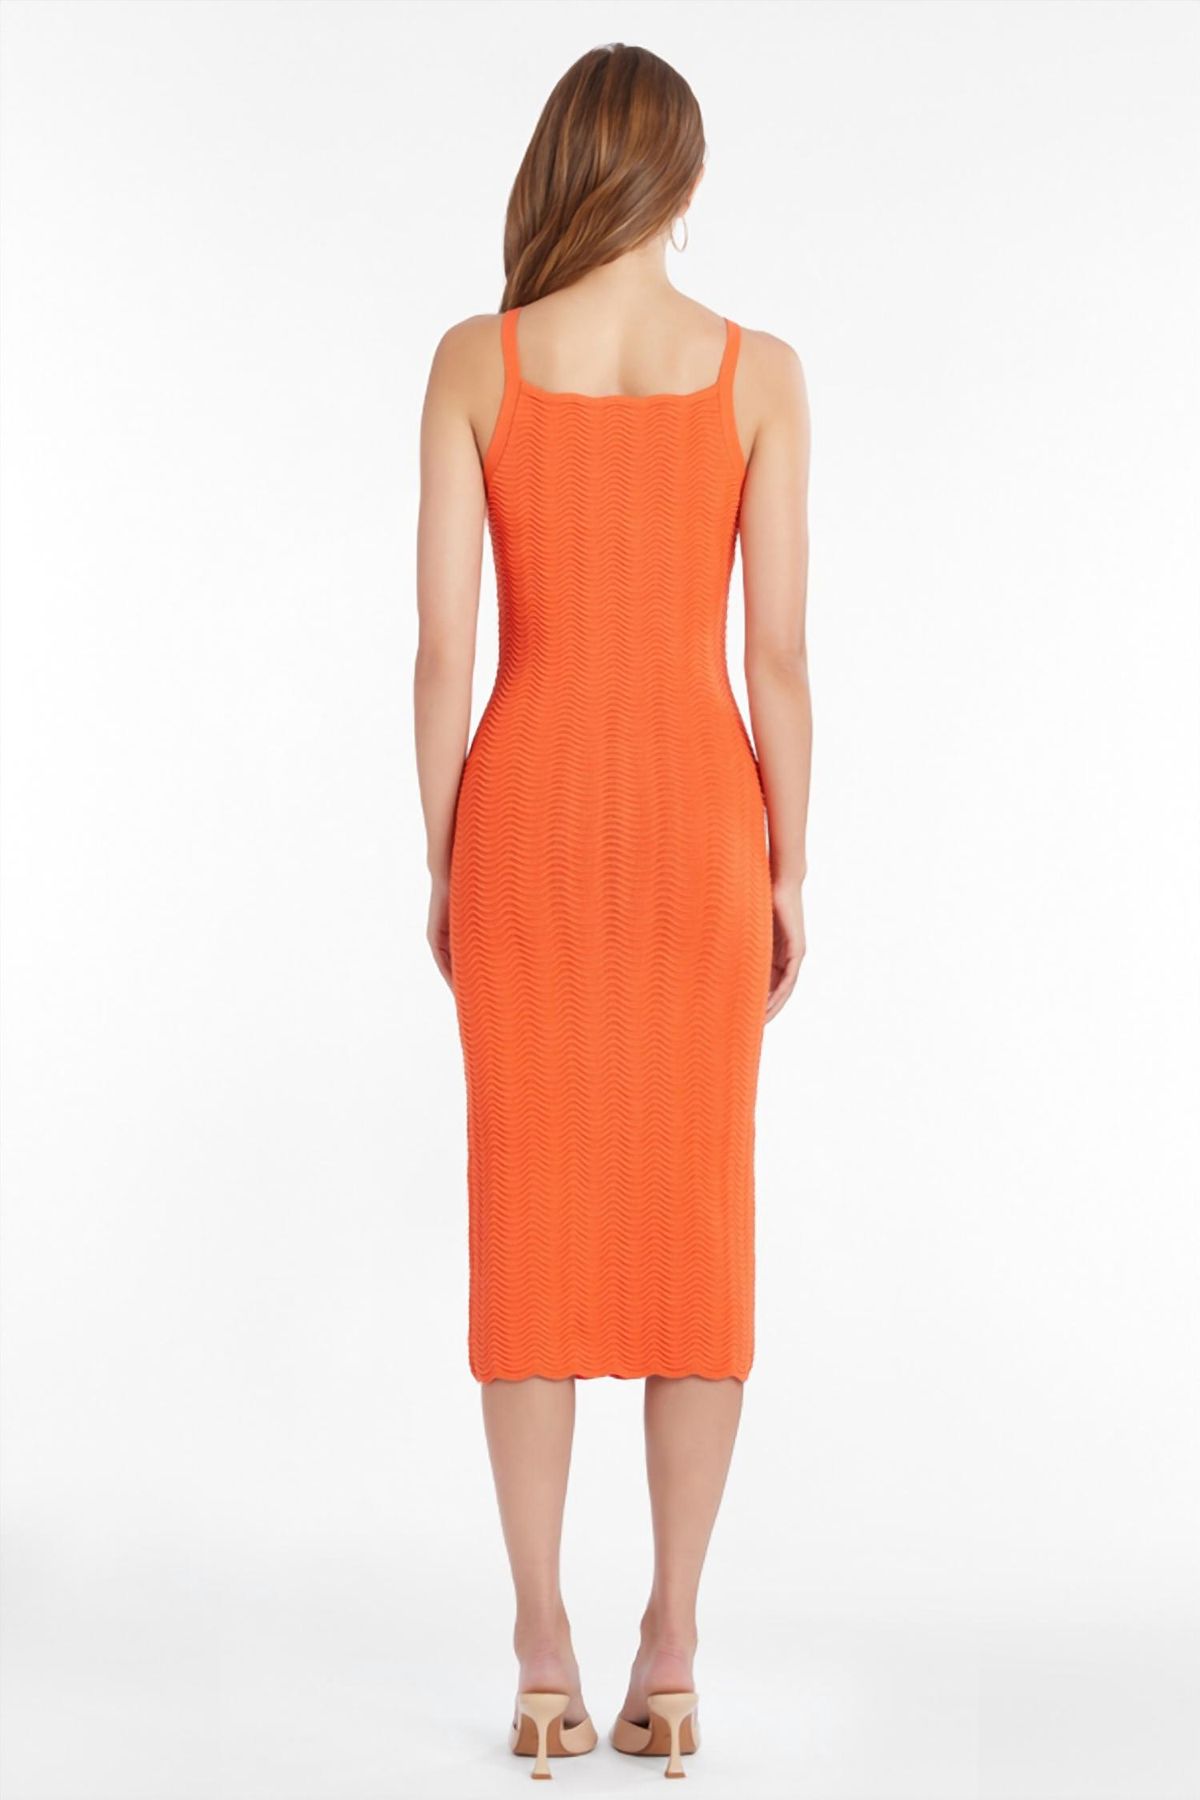 Style 1-2292363468-892 Amanda Uprichard Size M Orange Cocktail Dress on Queenly